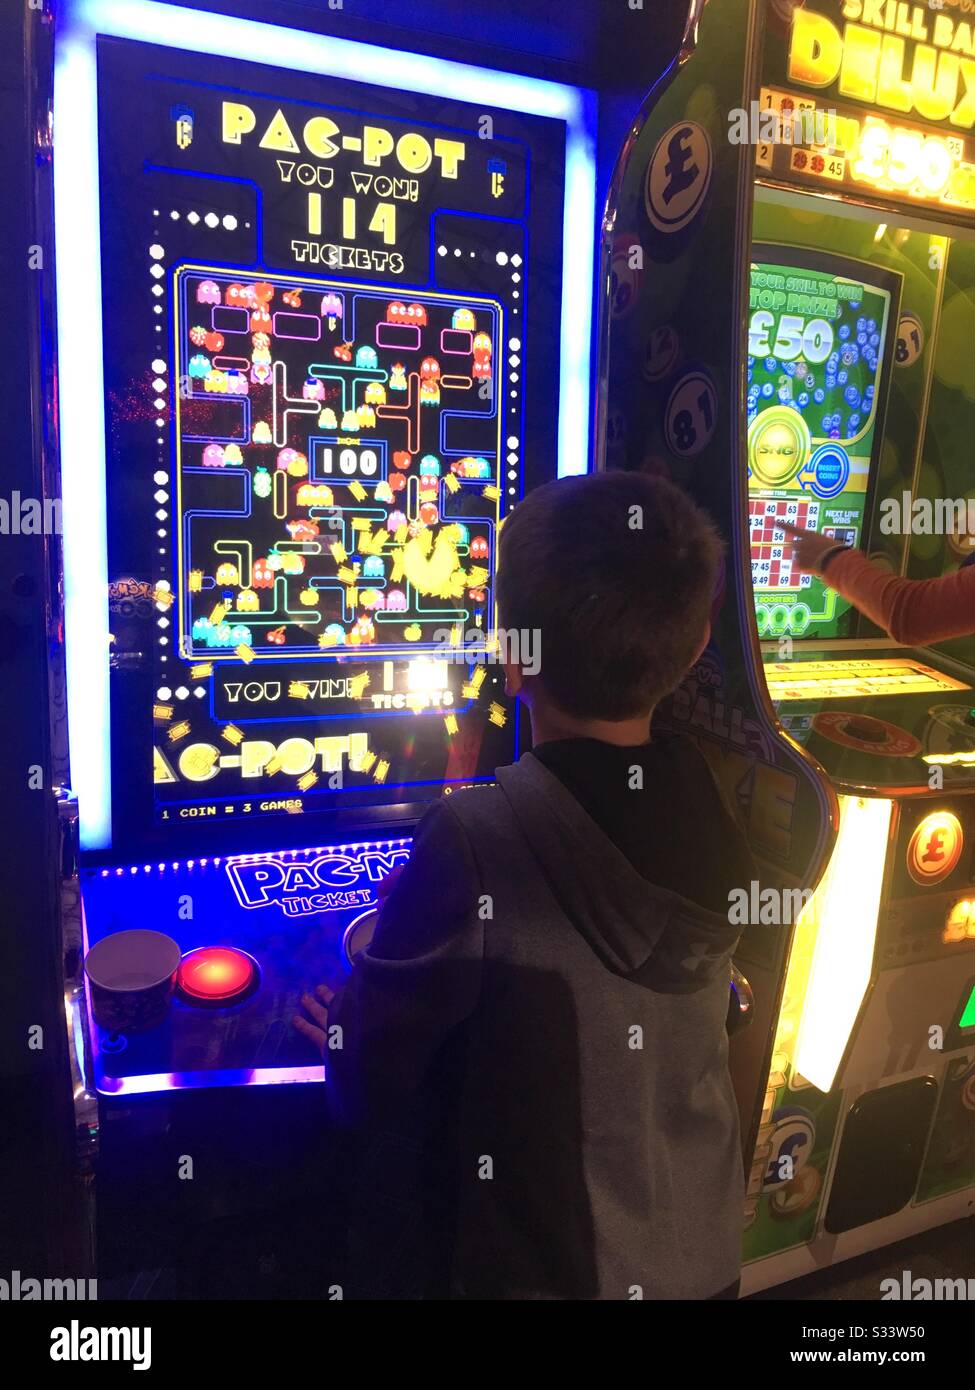 Pac man arcade game Stock Photo